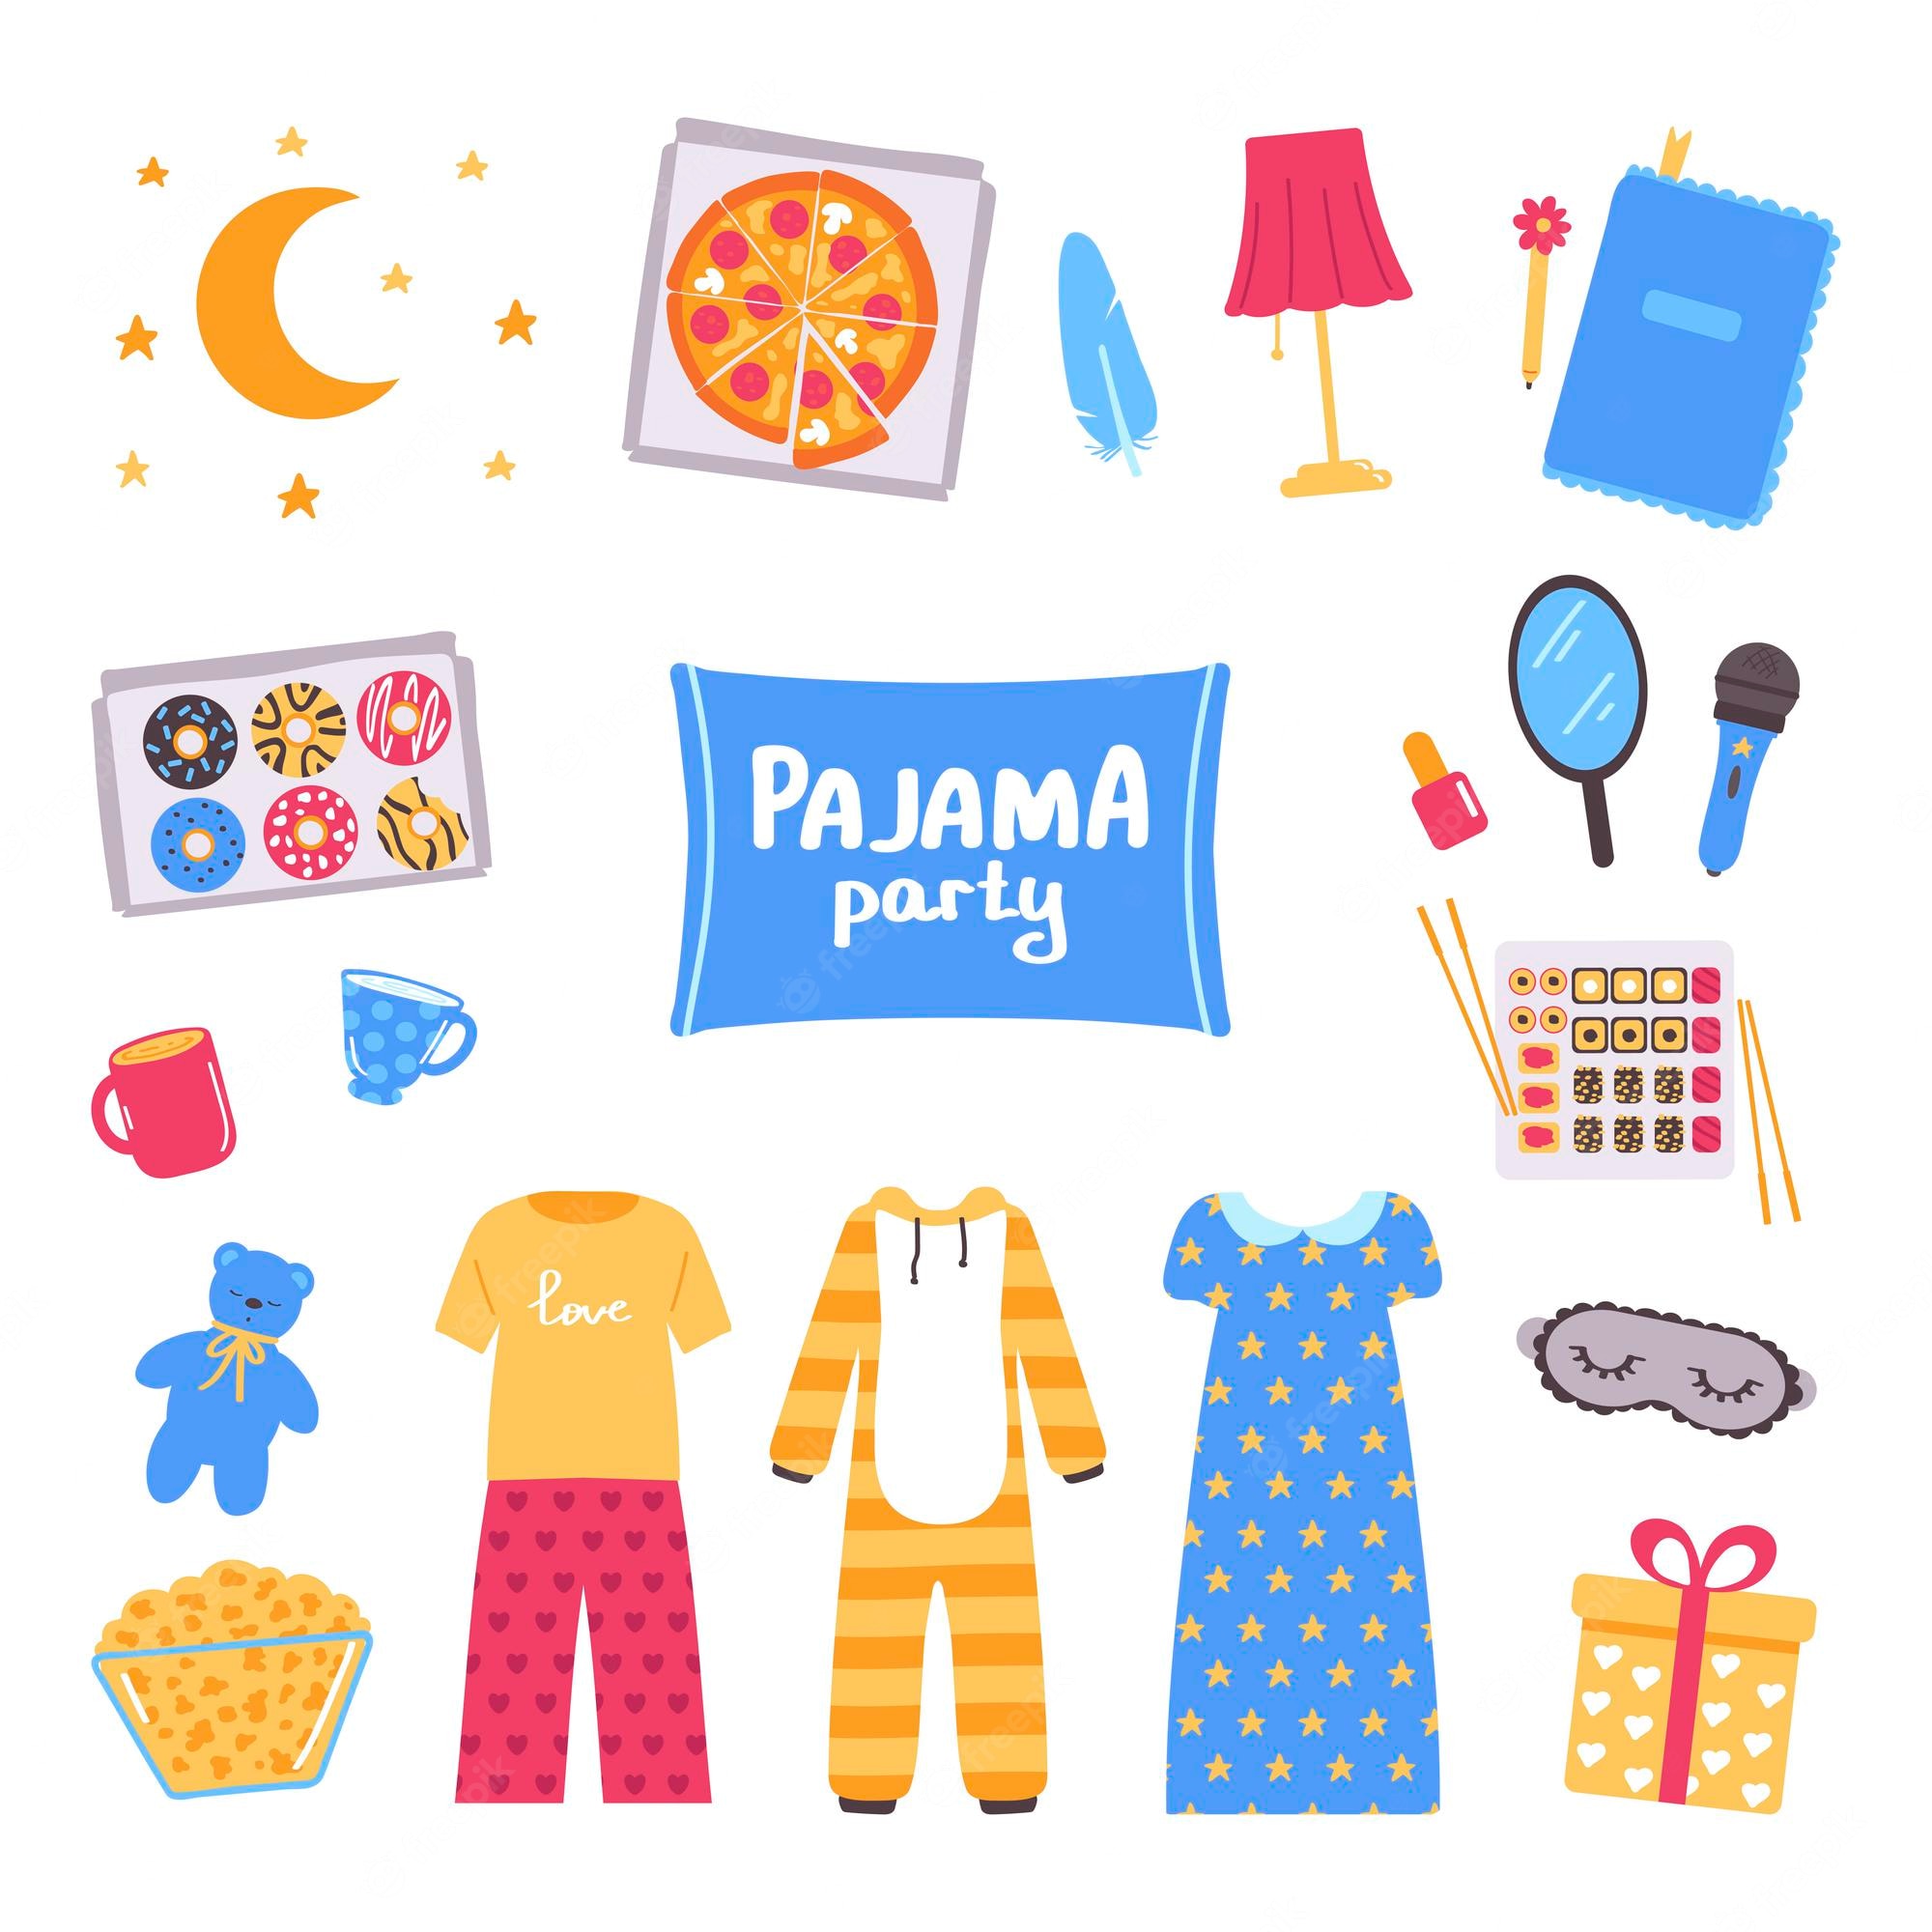 pajama party - Clip Art Library